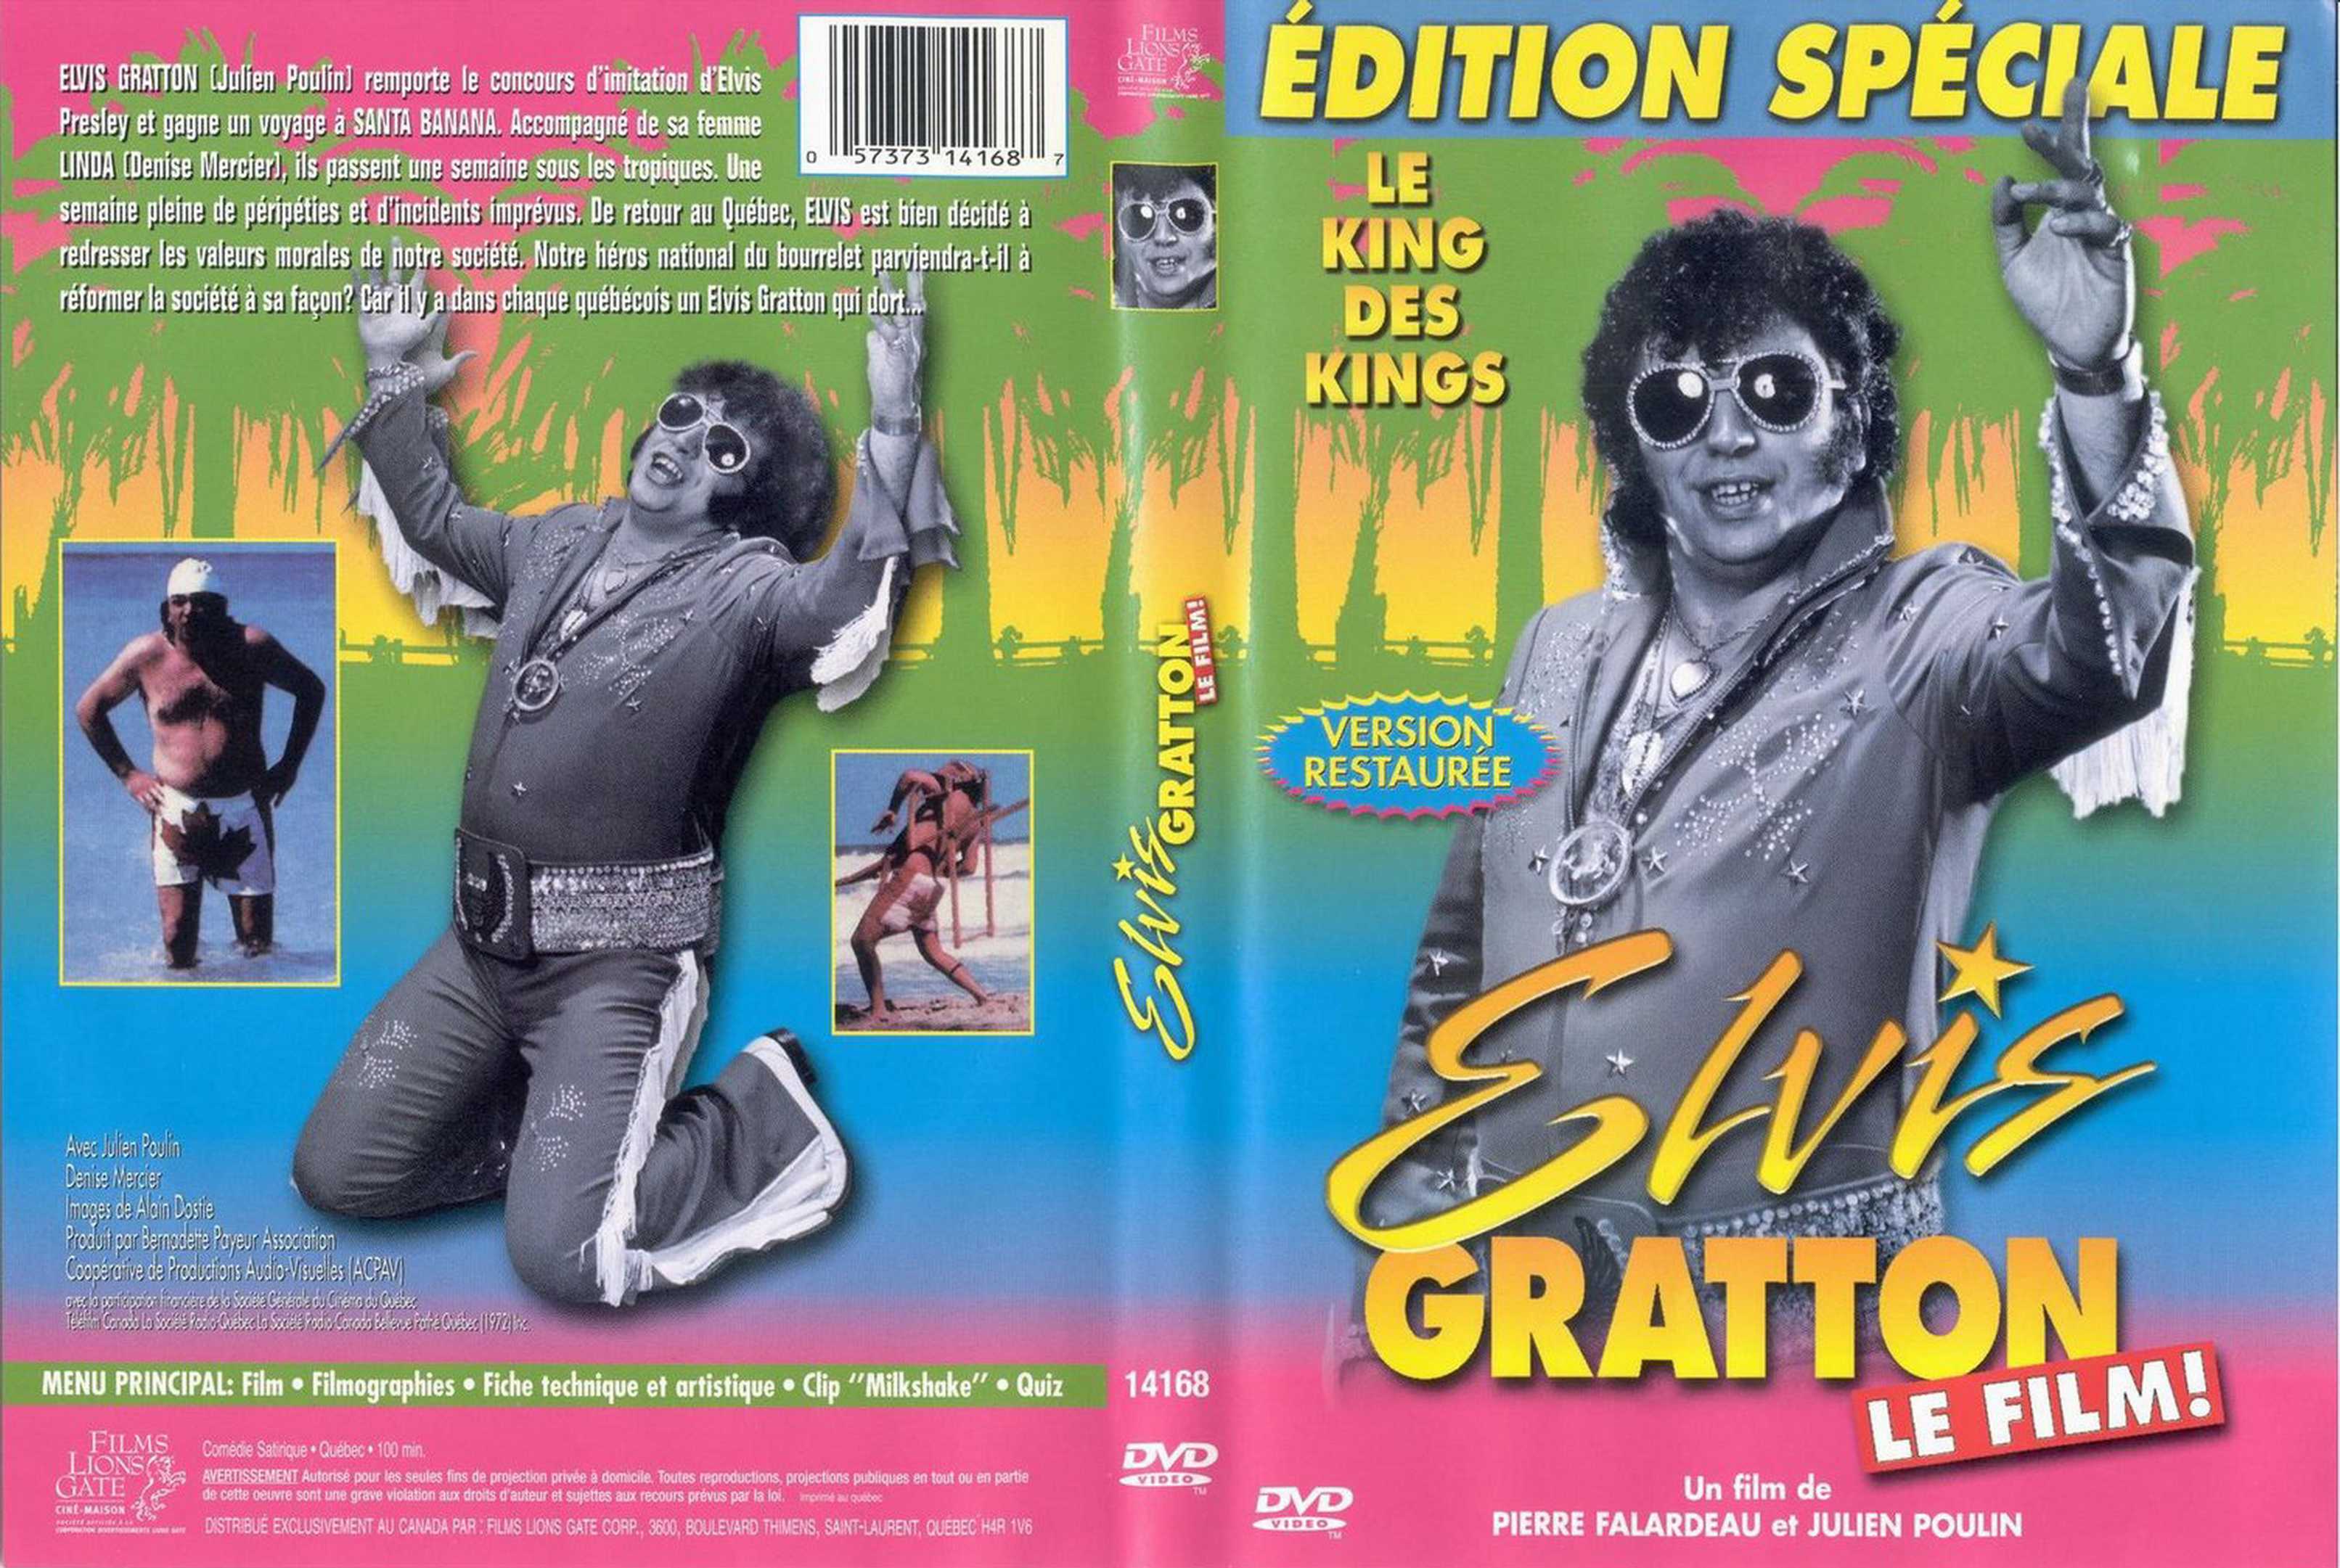 Jaquette DVD Elvis Gratton